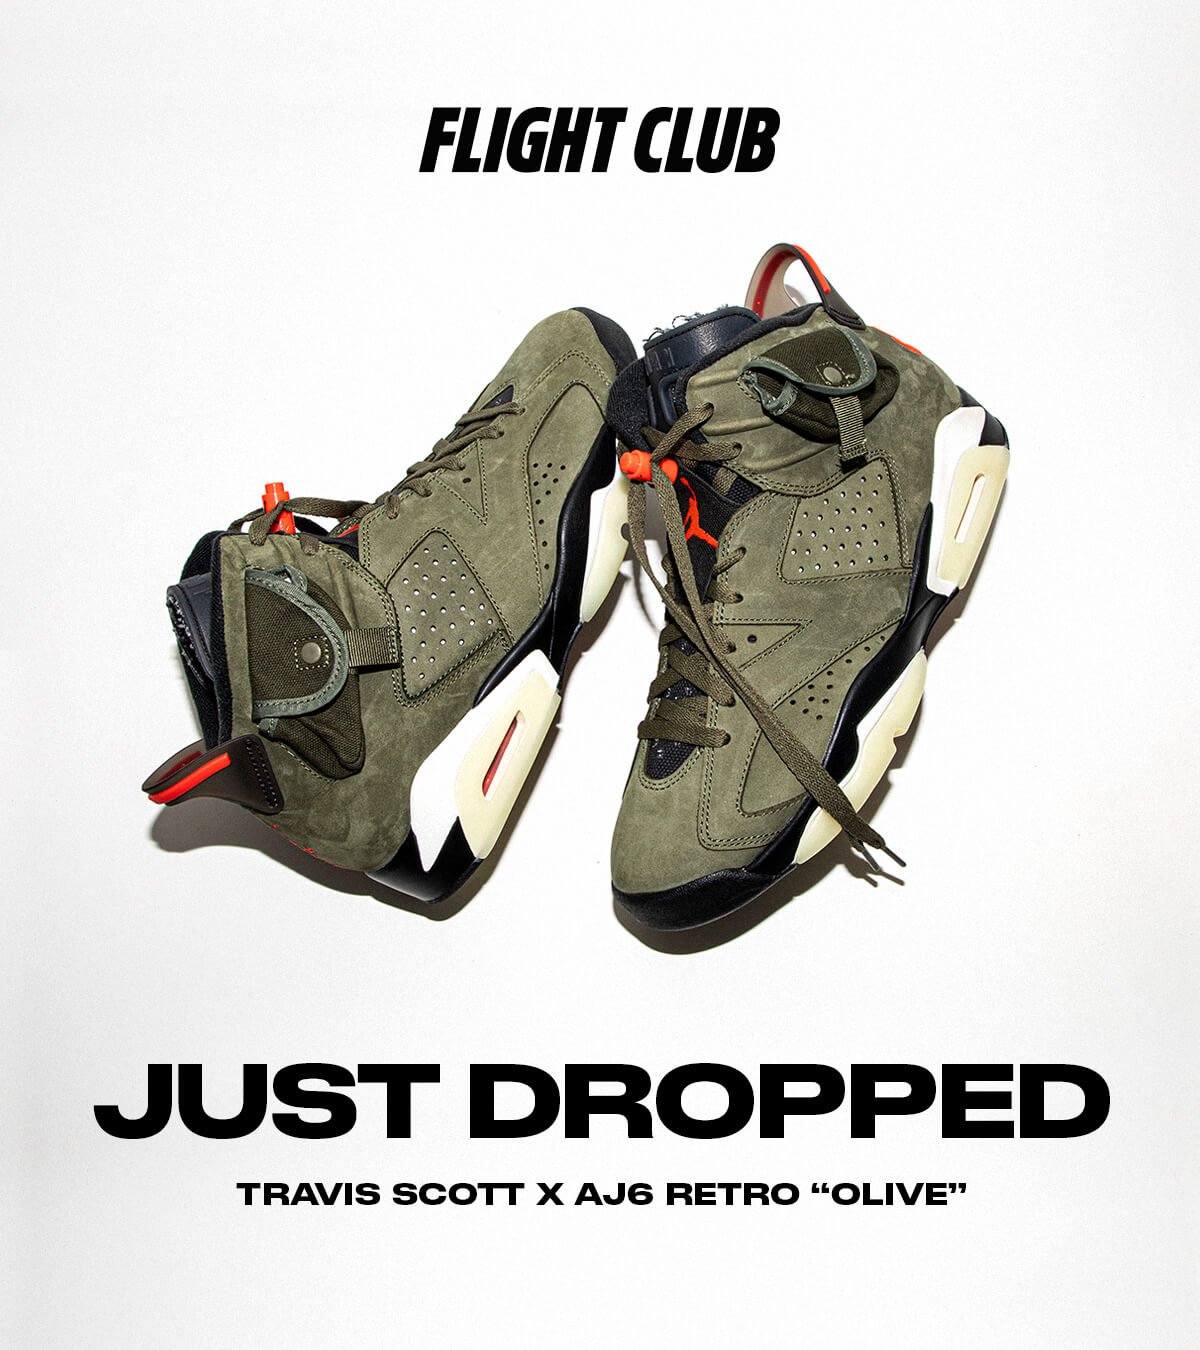 Travis Scott x Air Jordan 6 available 